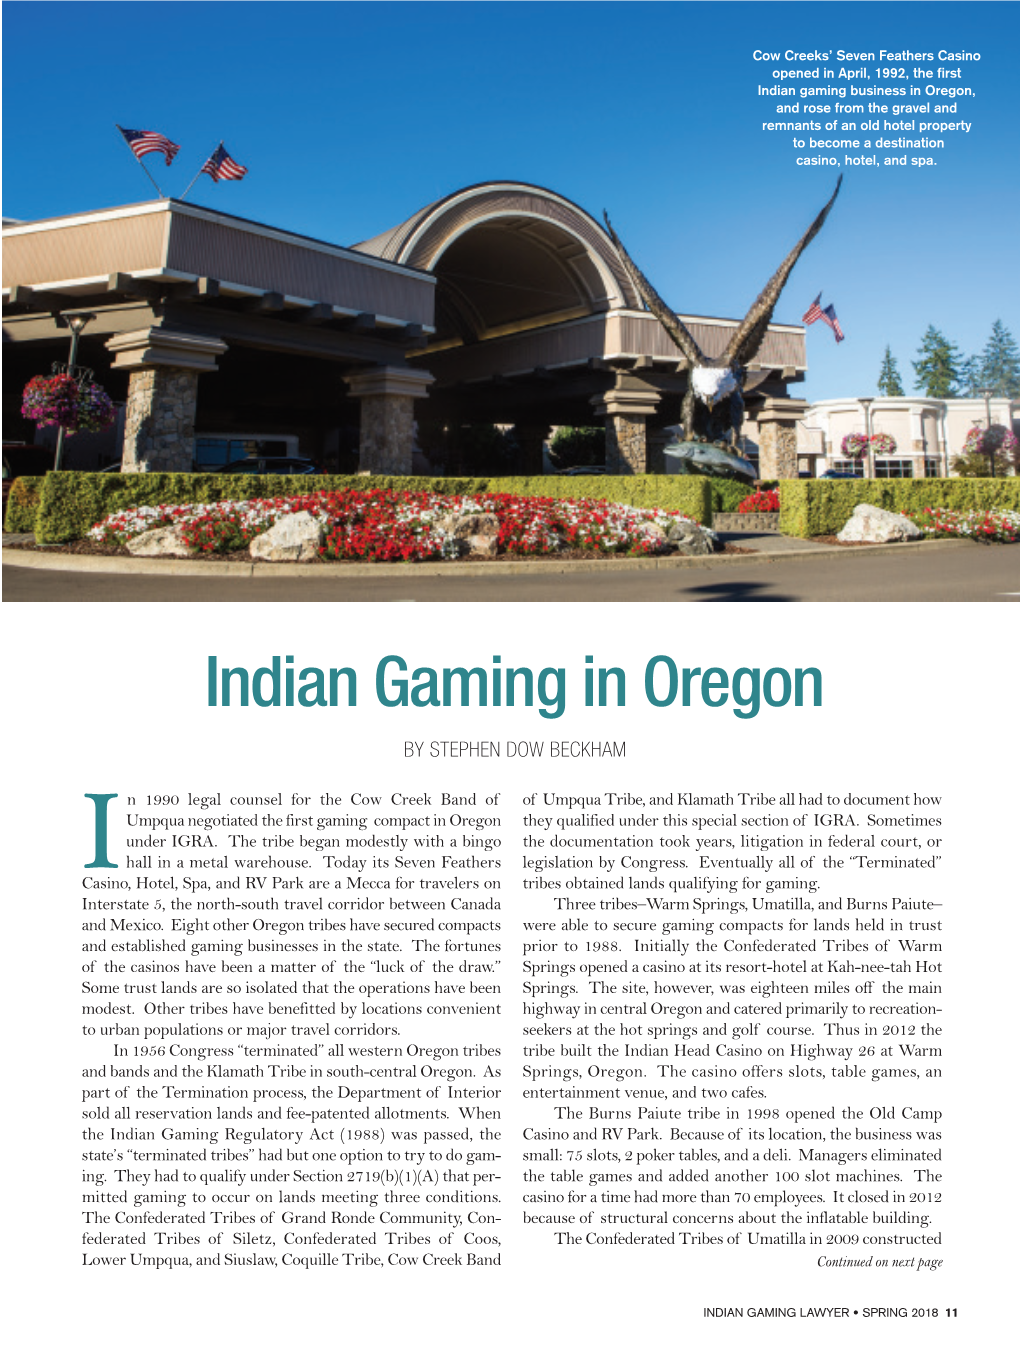 Indian Gaming in Oregon